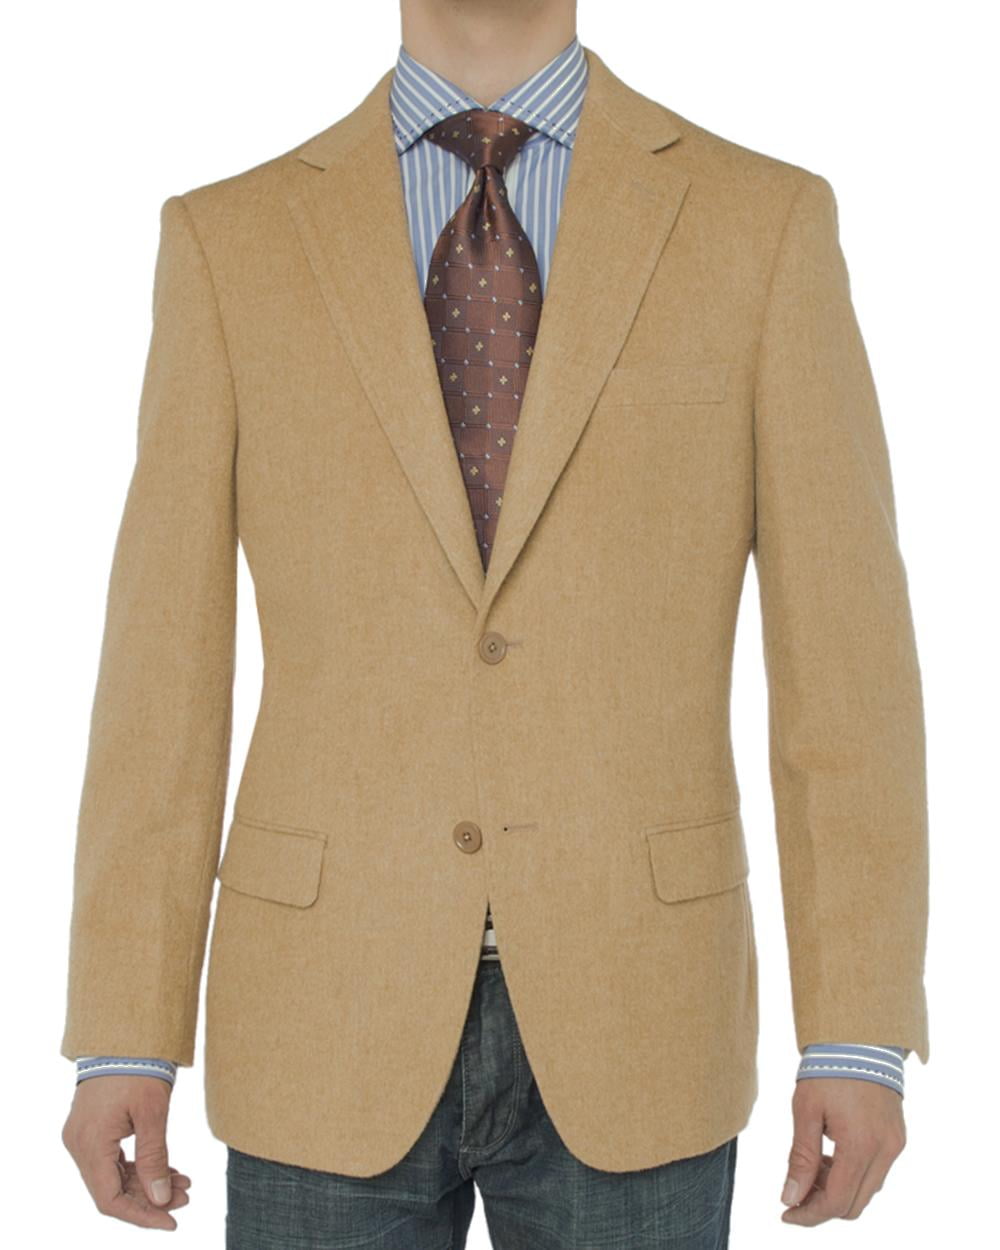 LN LUCIANO NATAZZI Men's Luxurious Camel Hair Blazer Modern Fit Suit ...